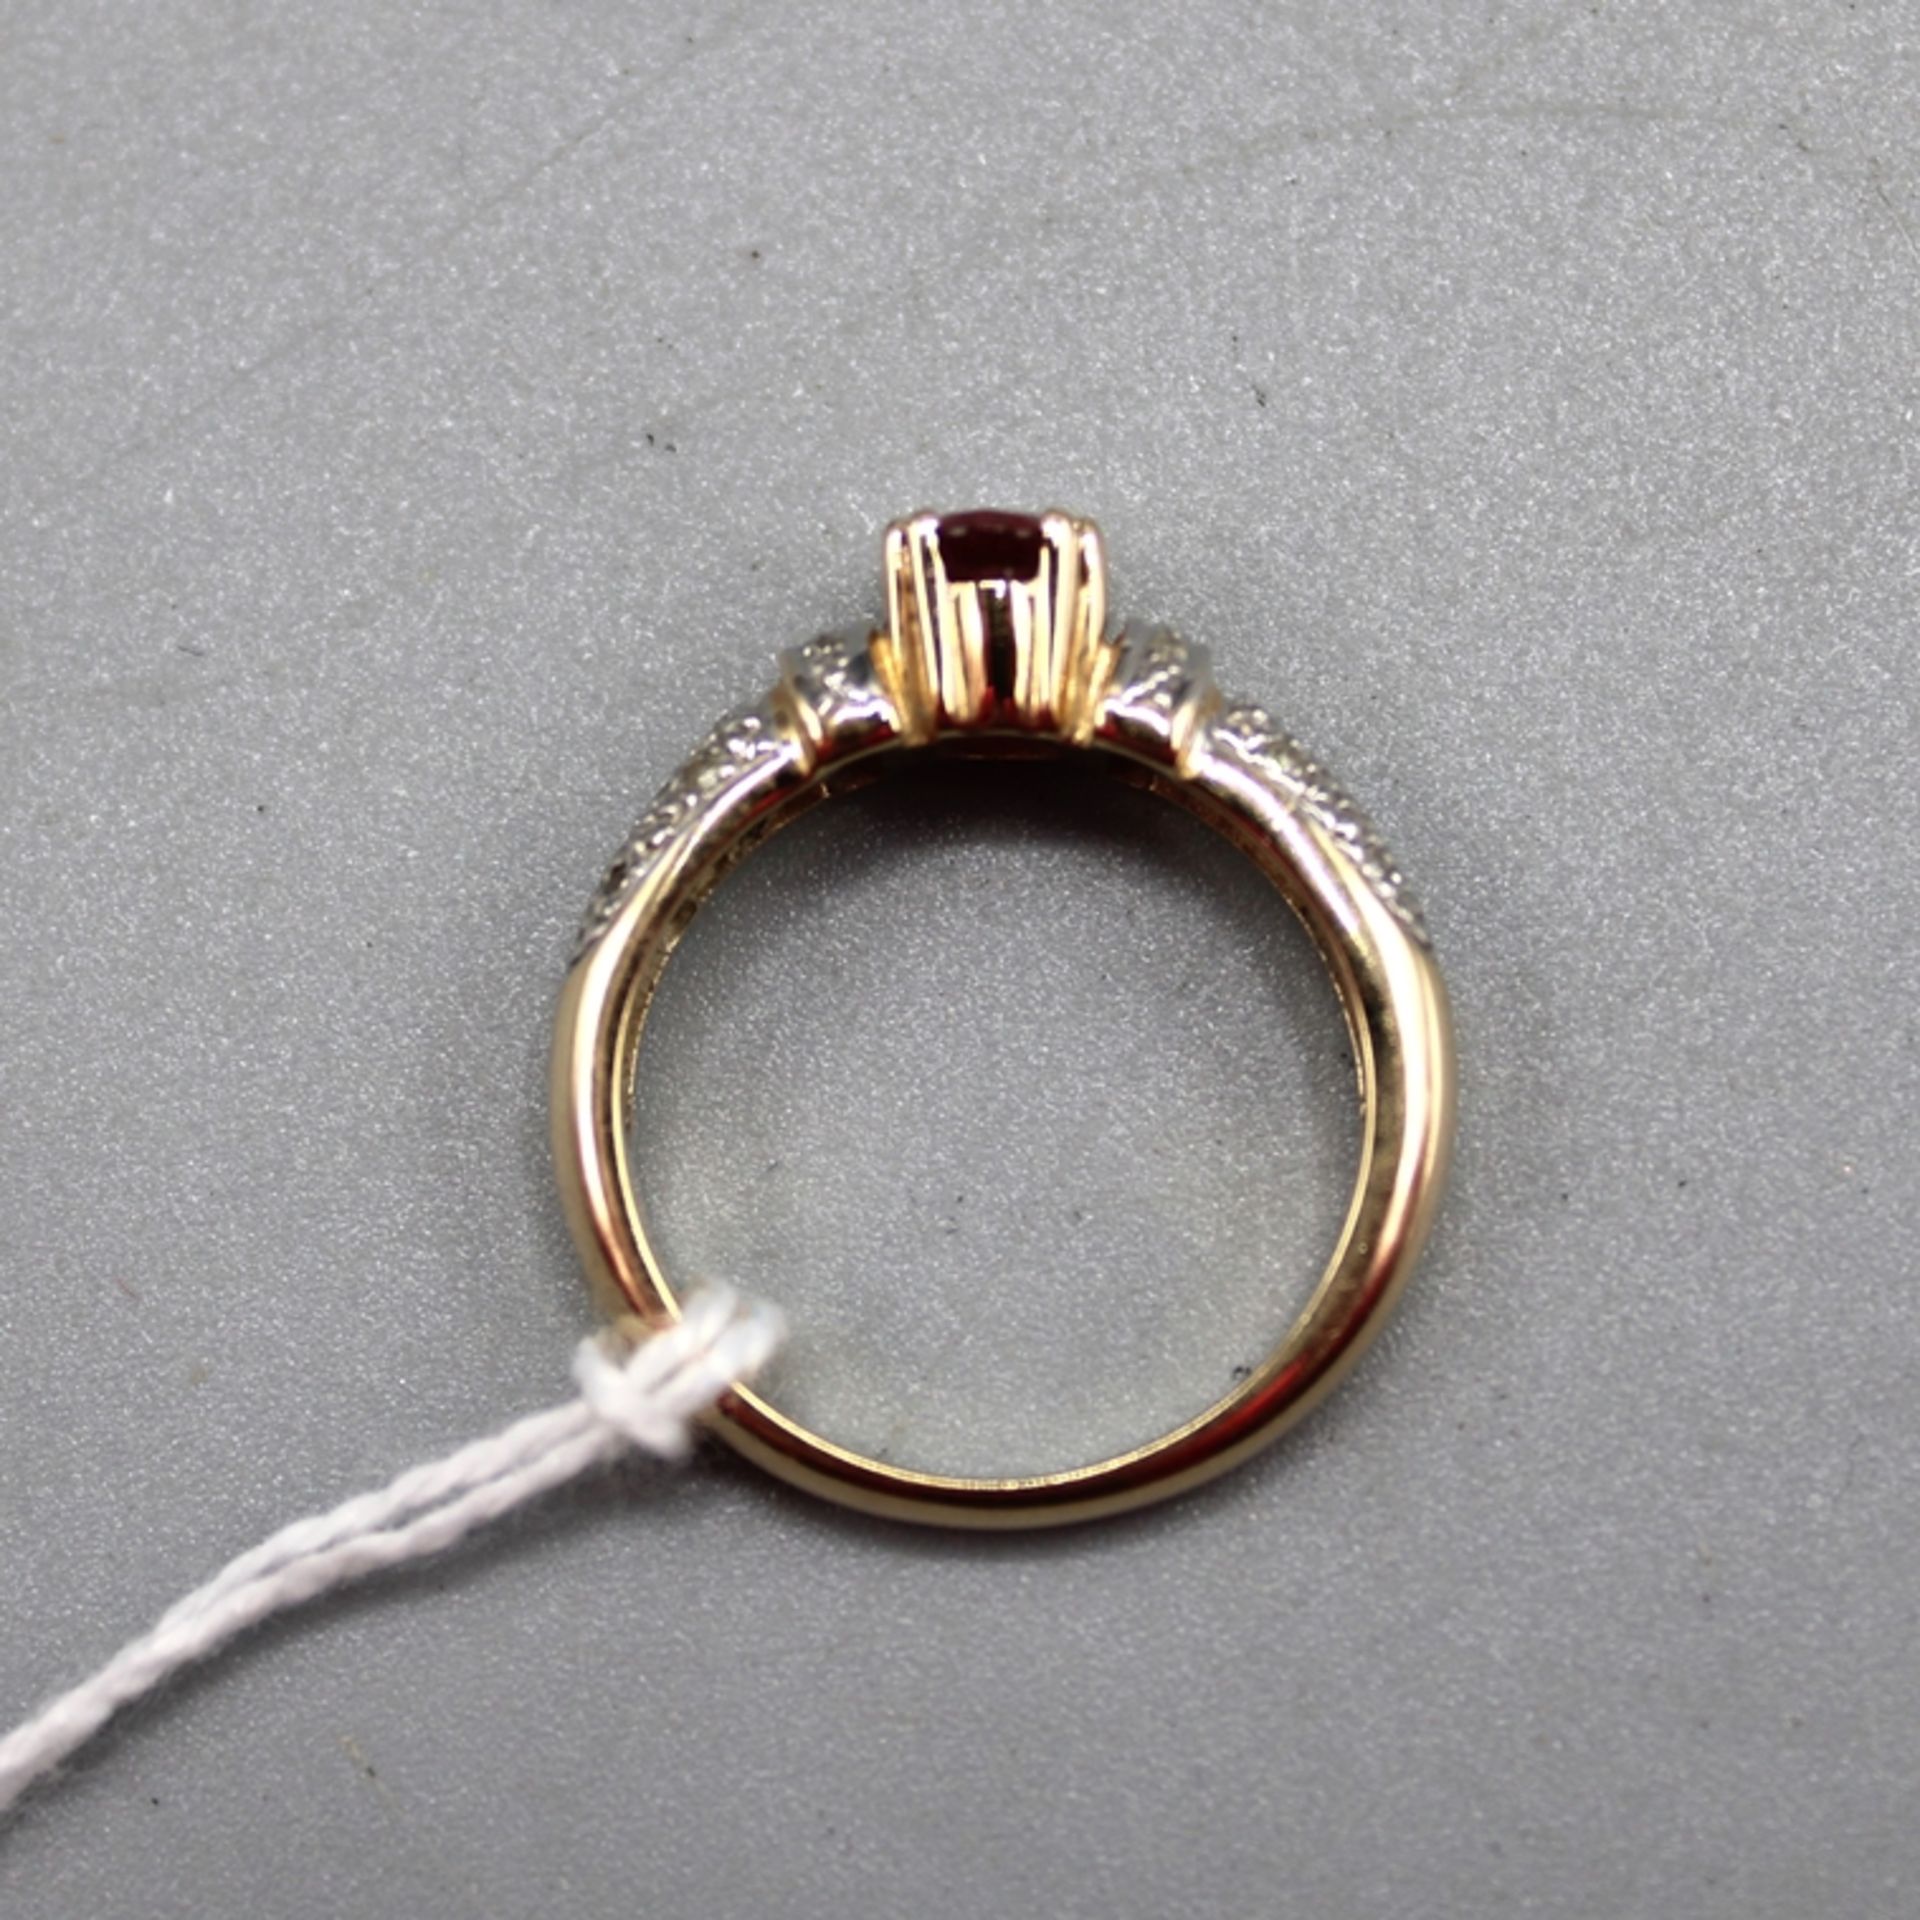 Goldring 585 m. rosa Edelstein (wohl Turmalin) u. kl. Diamanten, Ring Ø ca. 17,5 mm, 5,2 g - Bild 2 aus 2